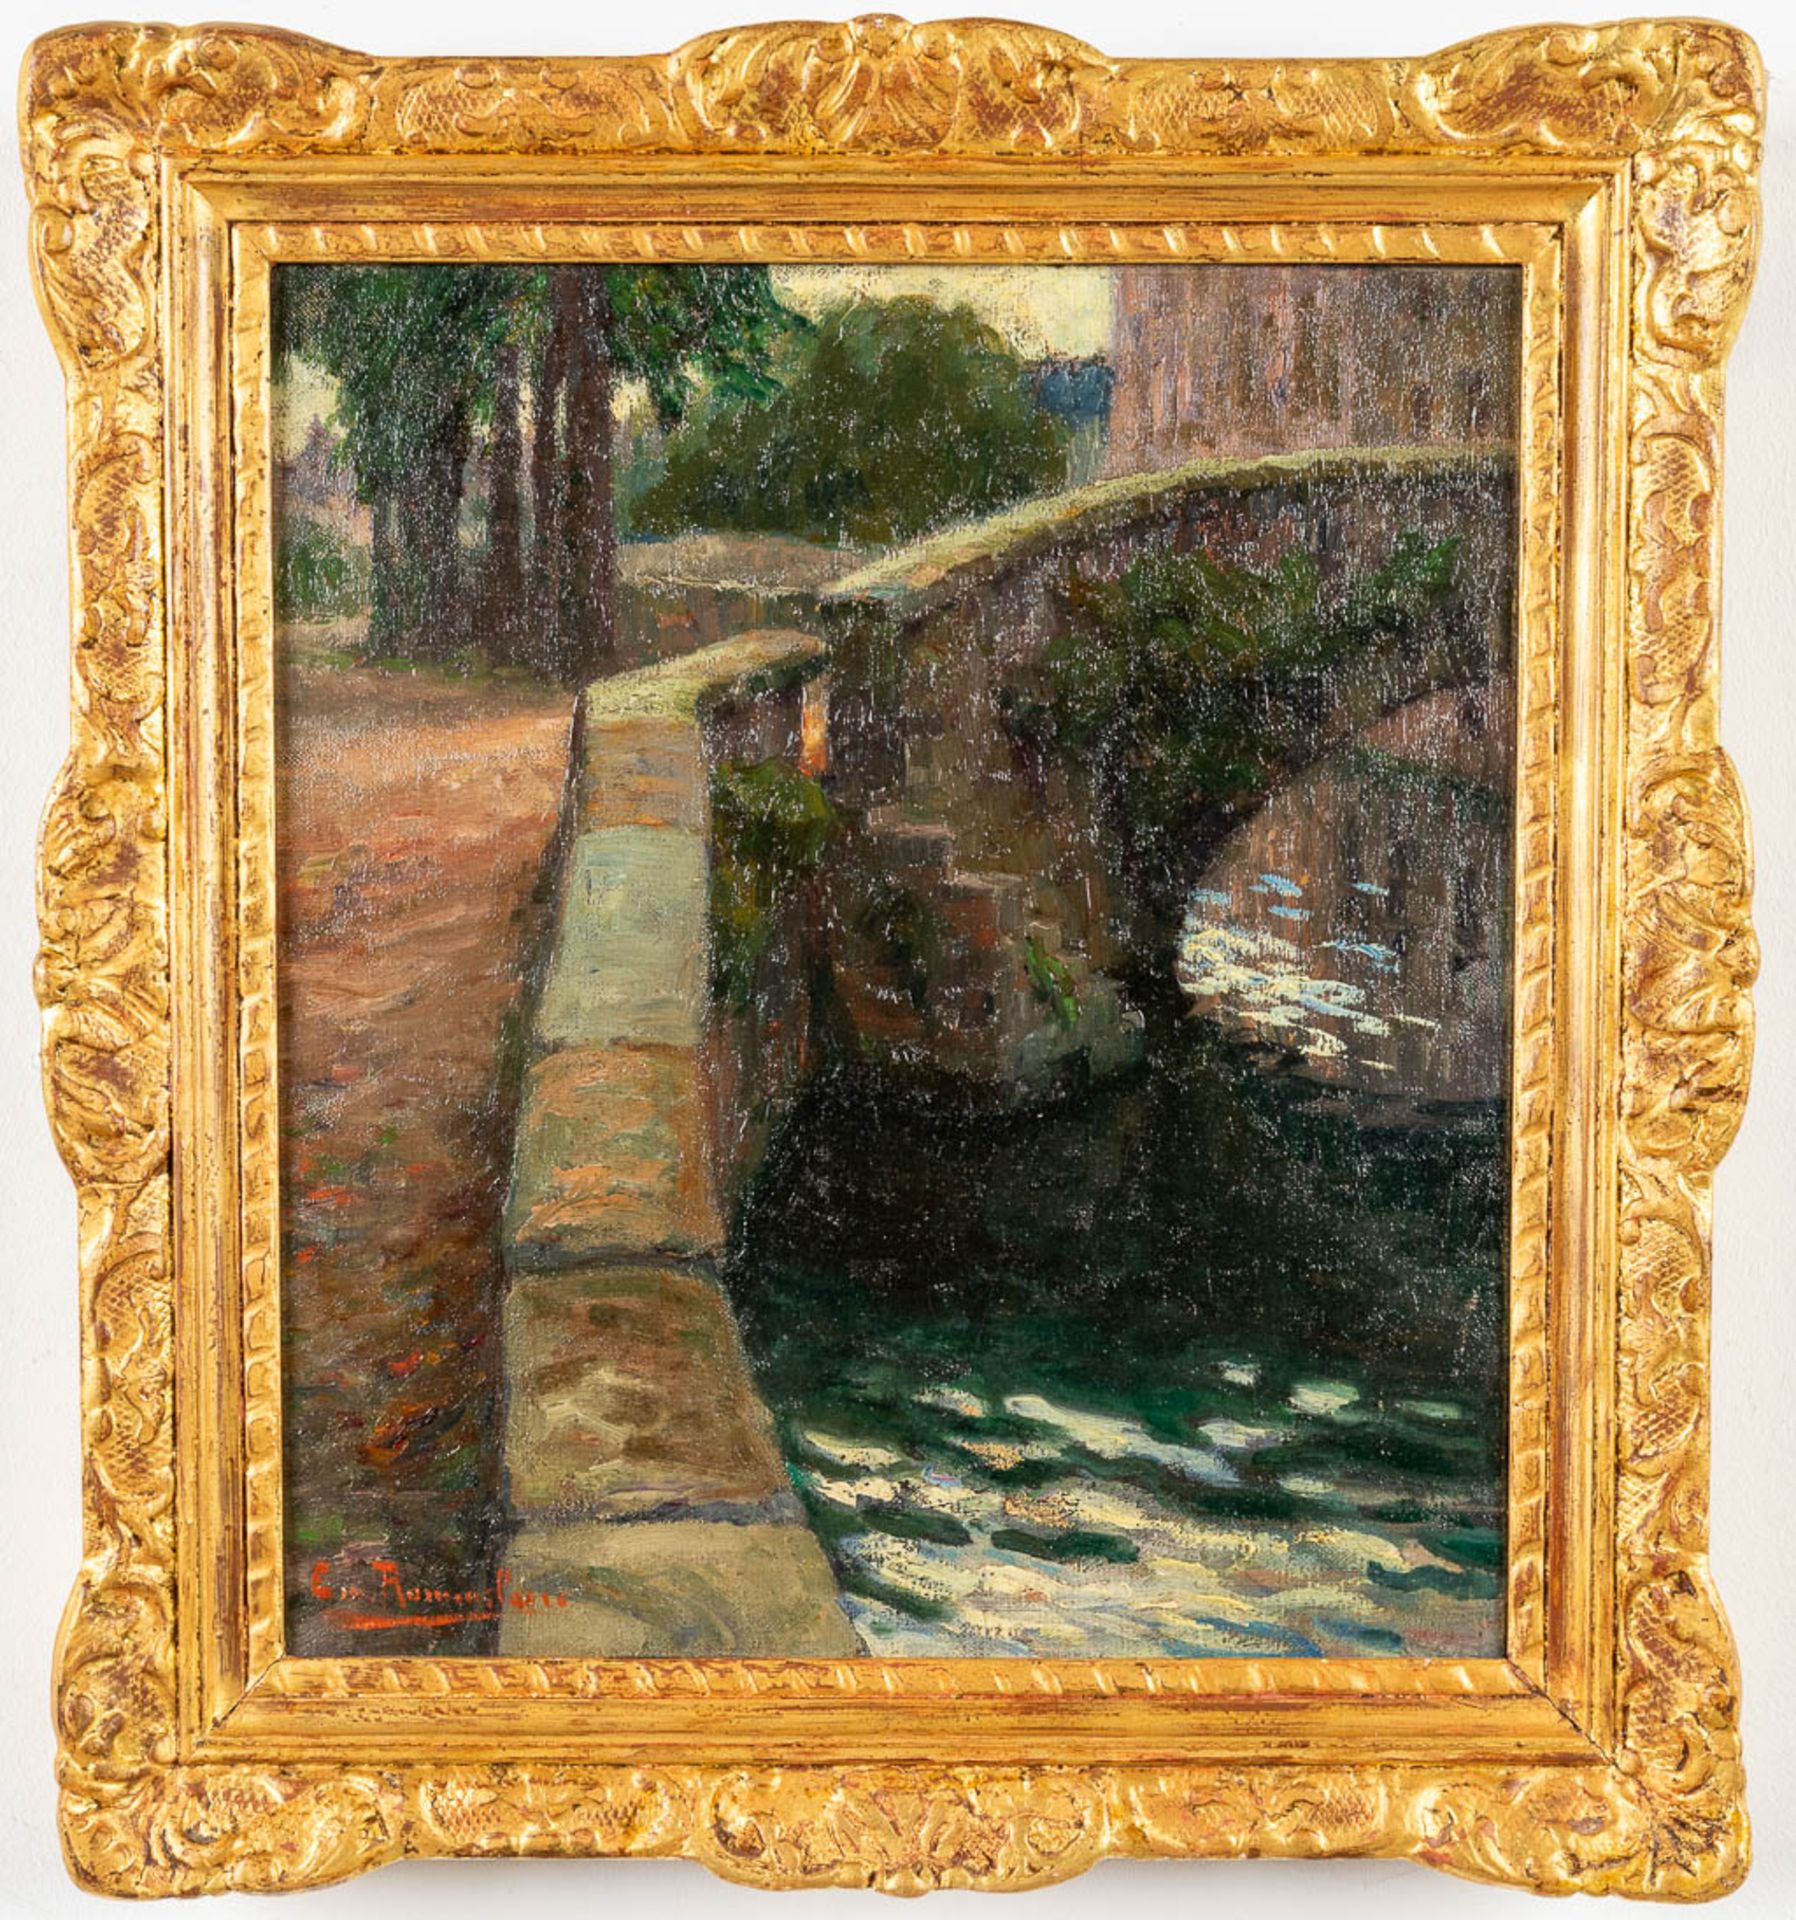 Emile ROMMELAERE (1873-1961) 'Groenerei' oil on canvas. (W: 40 x H: 45 cm) - Image 6 of 6